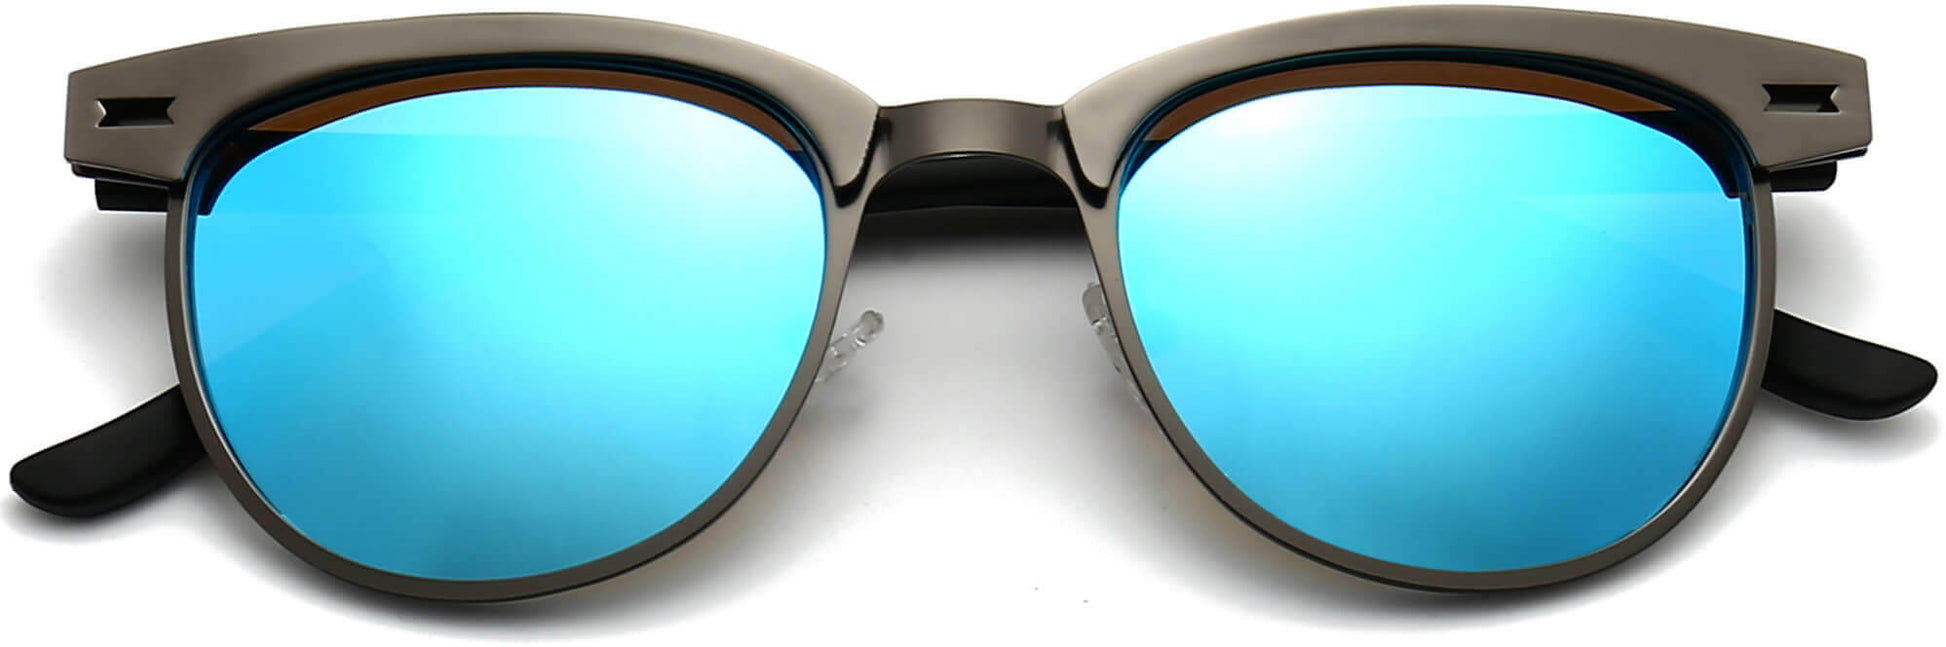 Braxton Blue Mirror Plastic Sunglasses from ANRRI, closed view